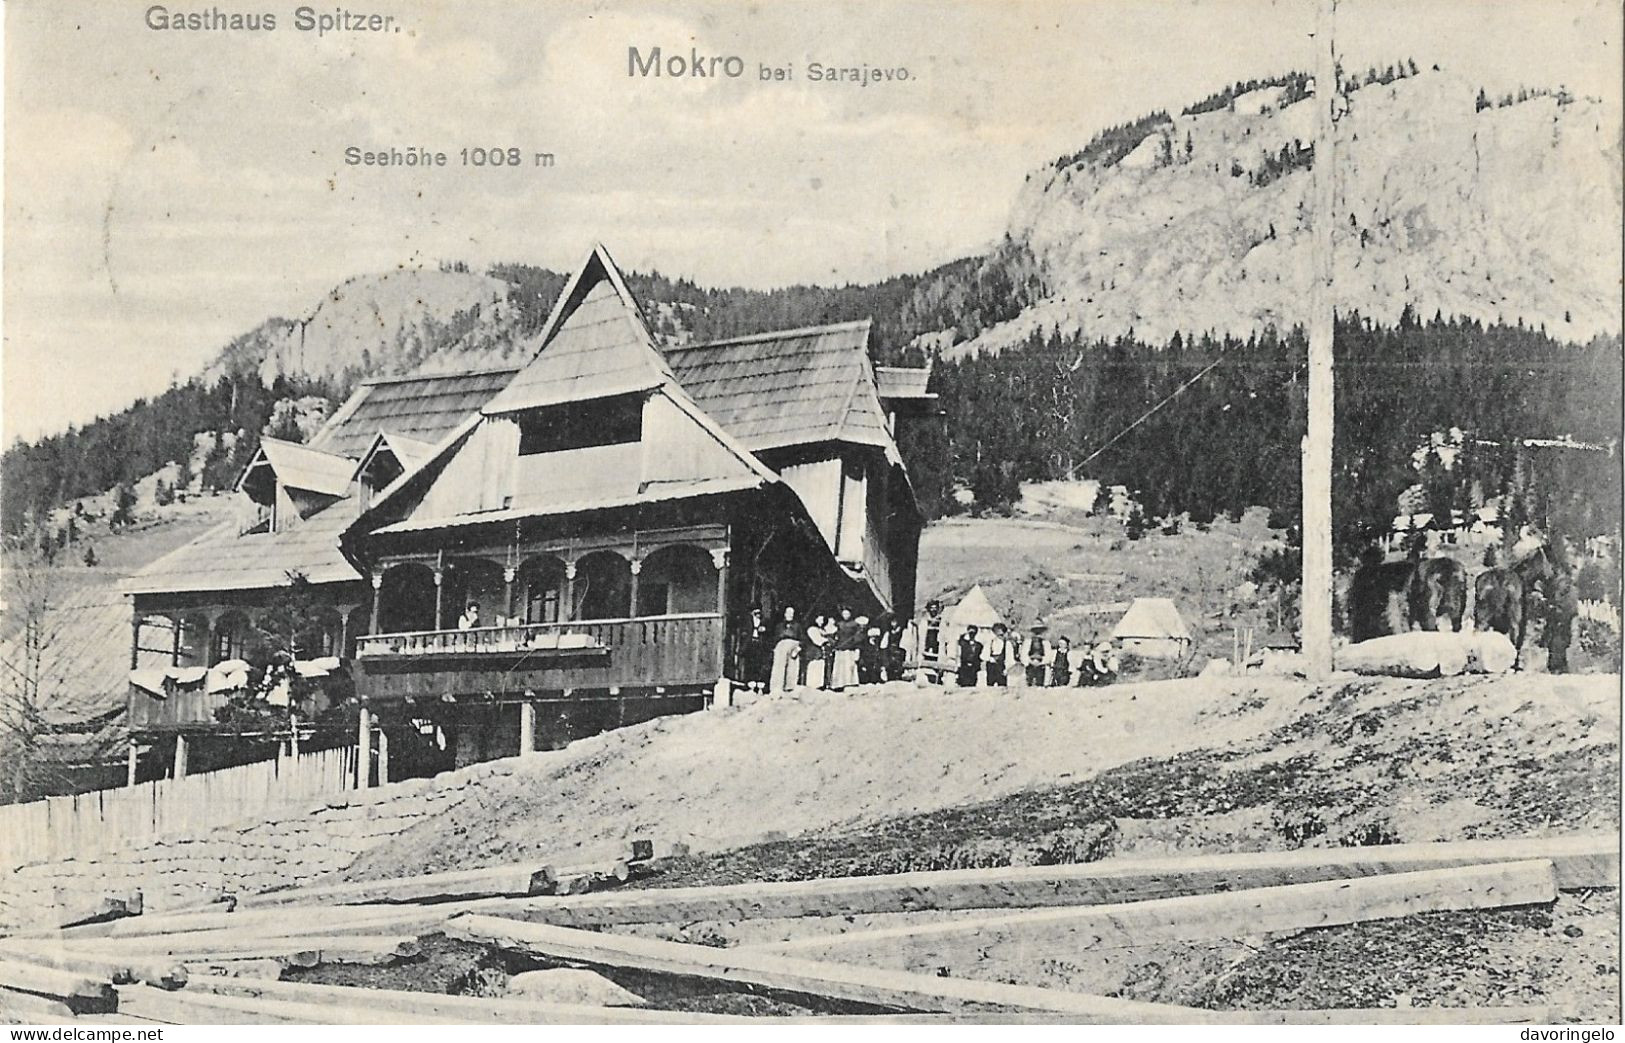 Bosnia-Herzegovina/Austria-Hungary, Picture Postcard-year 1910, Auxiliary Post Office/Ablage MOKRO, Type A1 - Bosnia Y Herzegovina